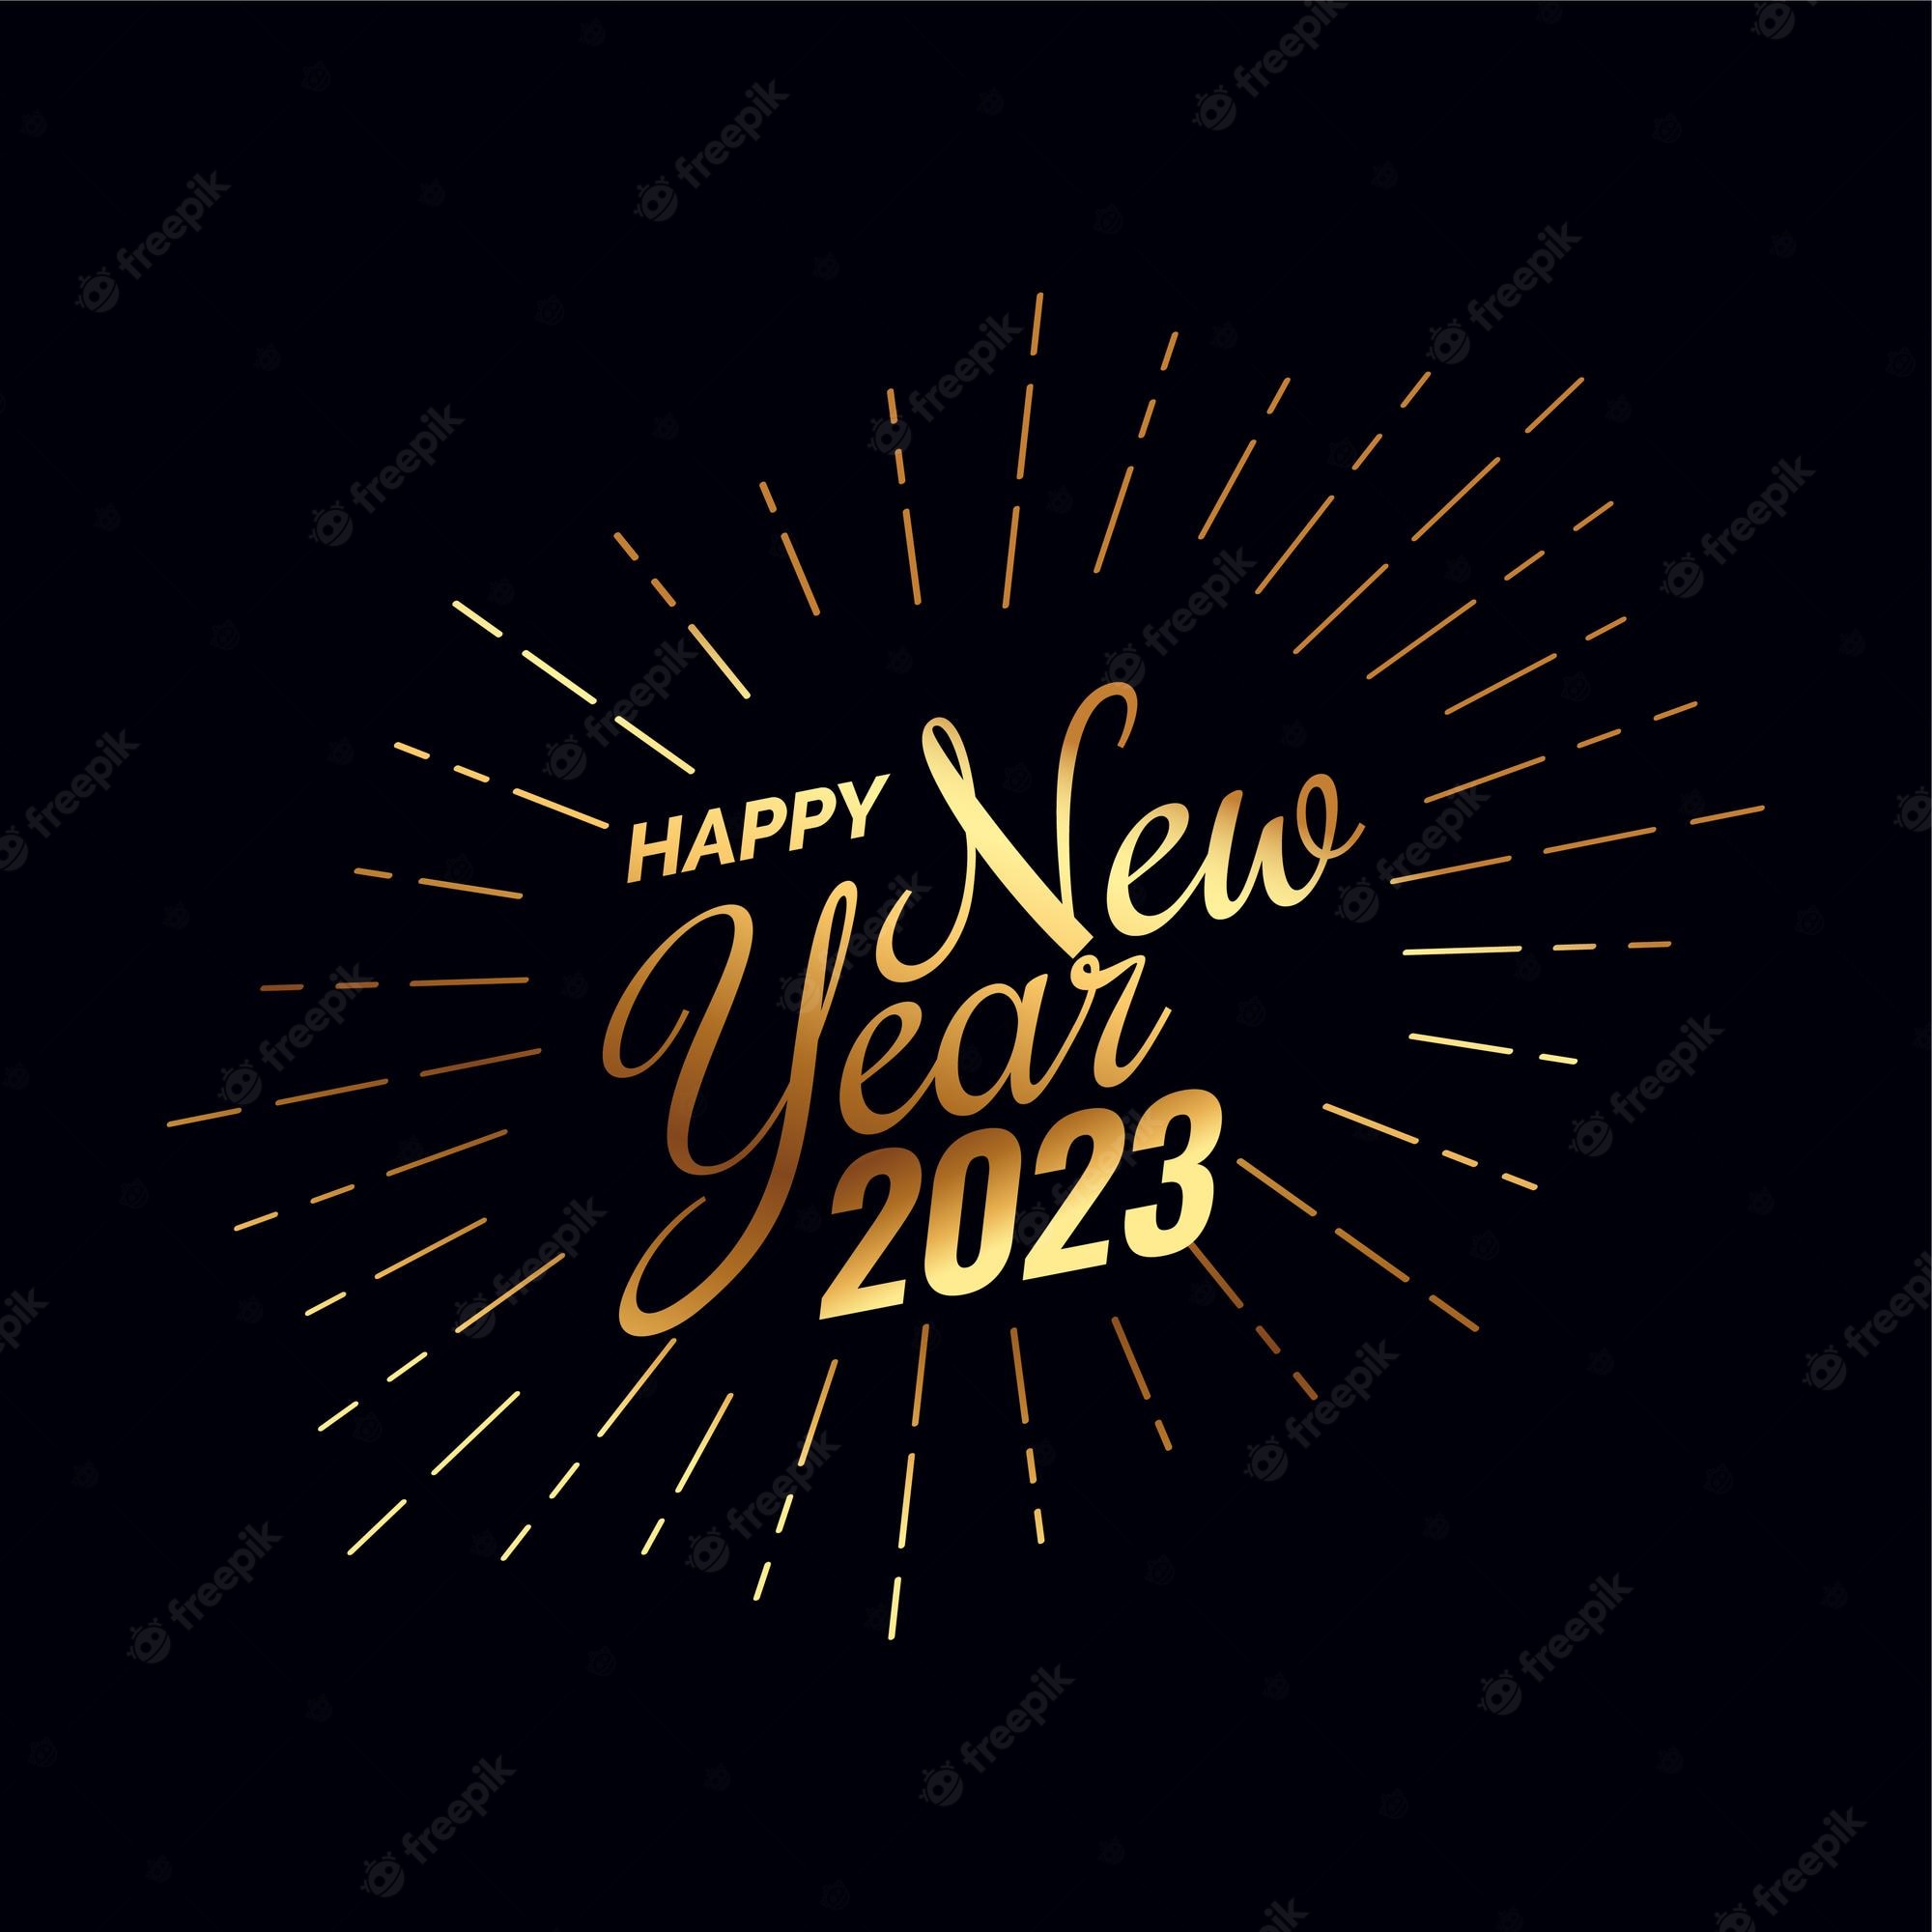 Happy new year 2023 Image. Free Vectors, & PSD